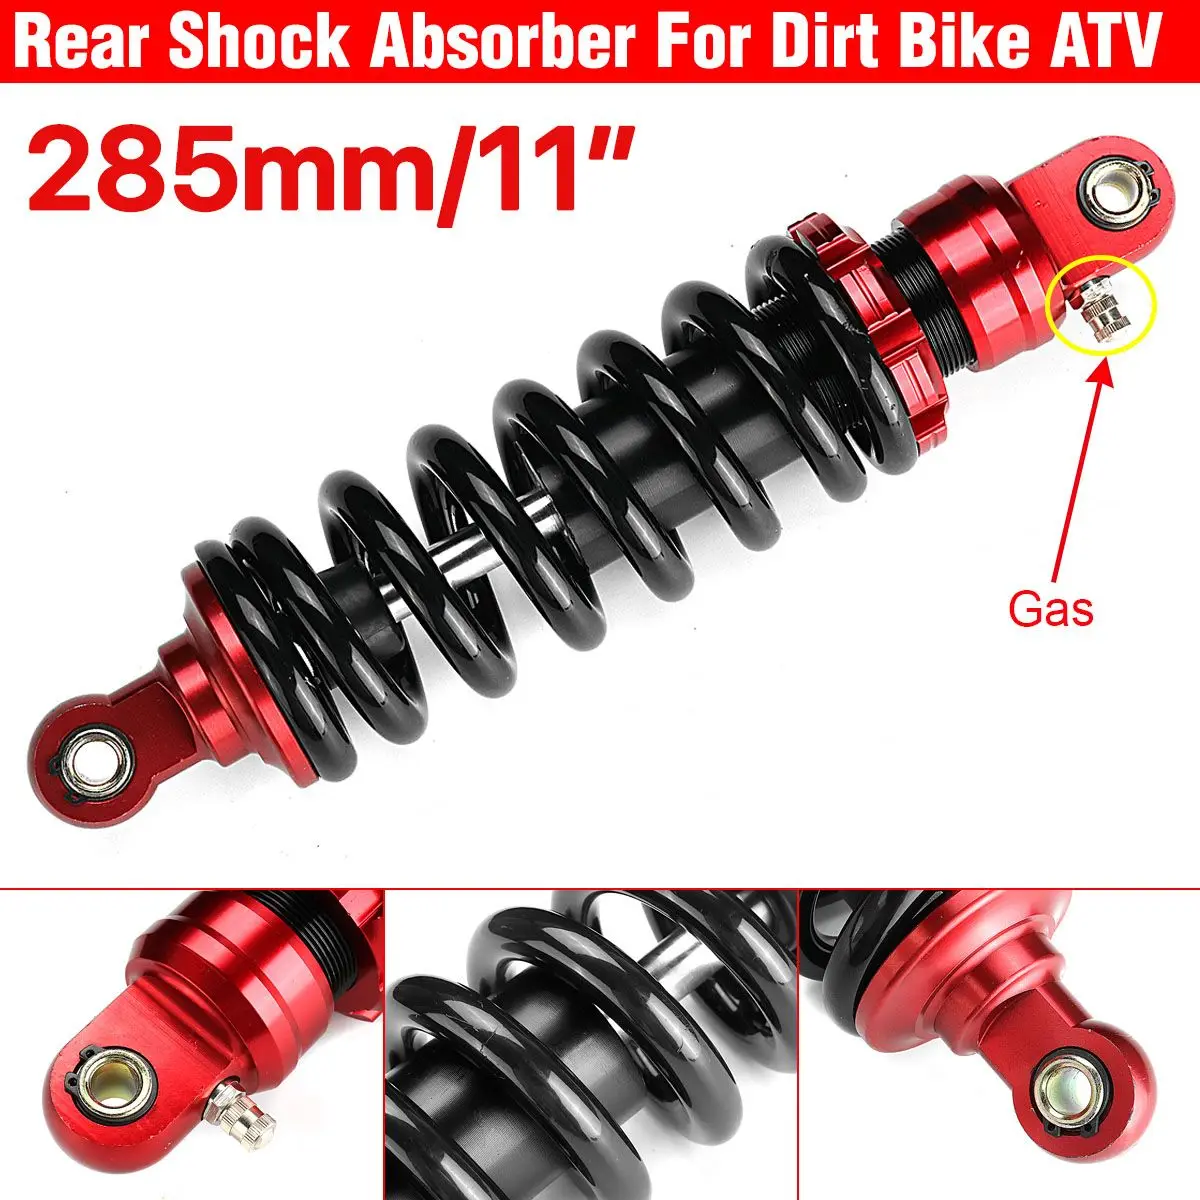 285mm 11" Rear Shock Absorber Suspension Dirt Bike For 50cc-125cc Dirt Bike ATV